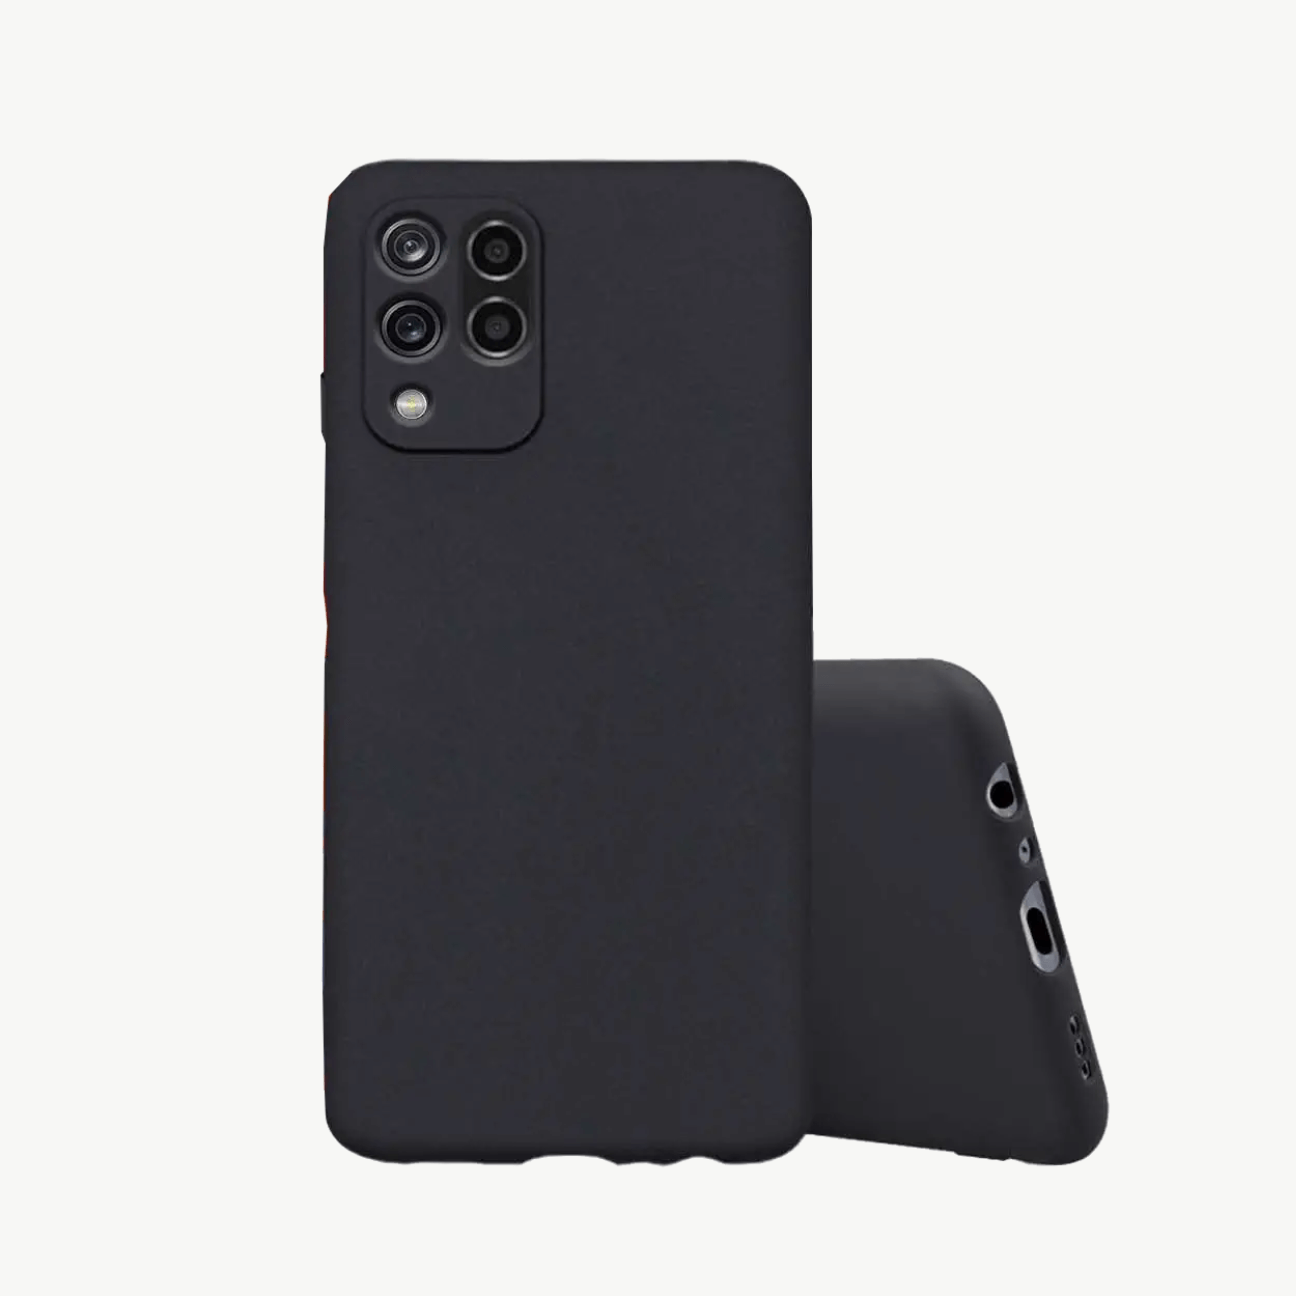 Xiaomi Redmi Y2 Black Soft Silicone Phone Case